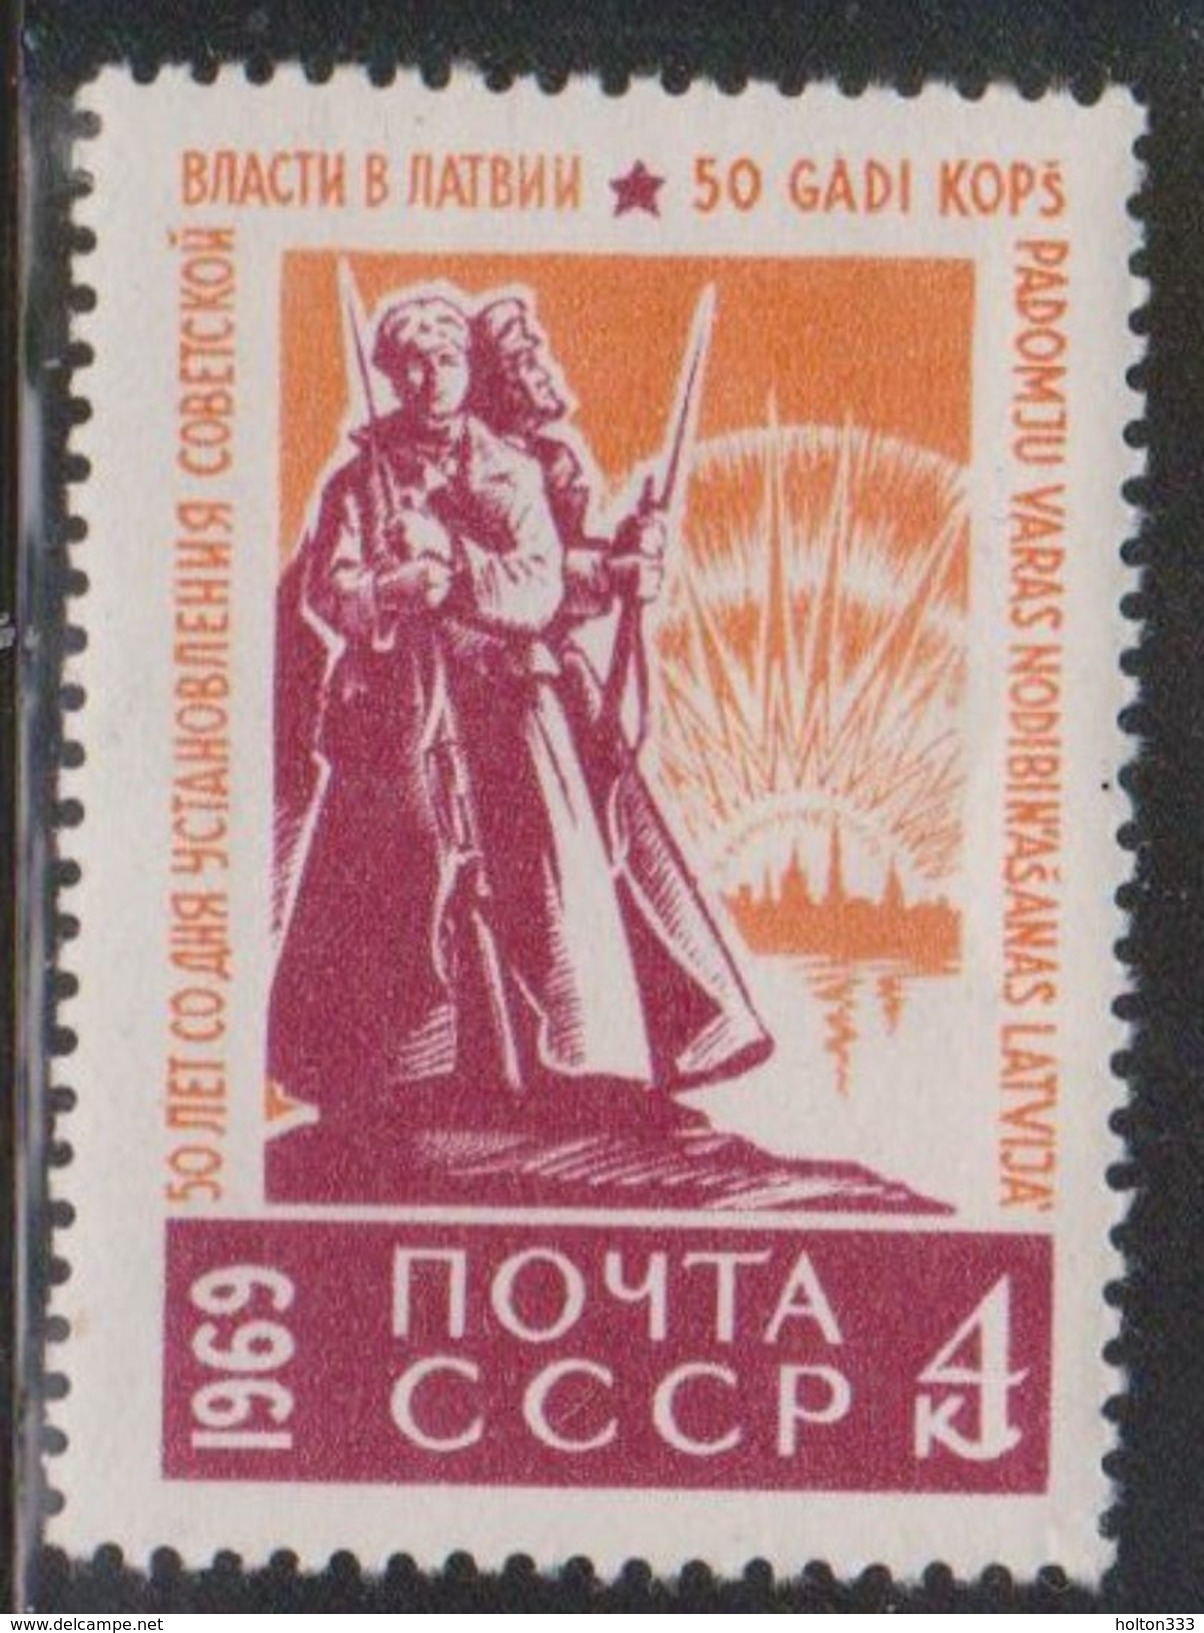 RUSSIA Scott # 3567 Mint Hinged - Latvian Soviet Republic - Exprès